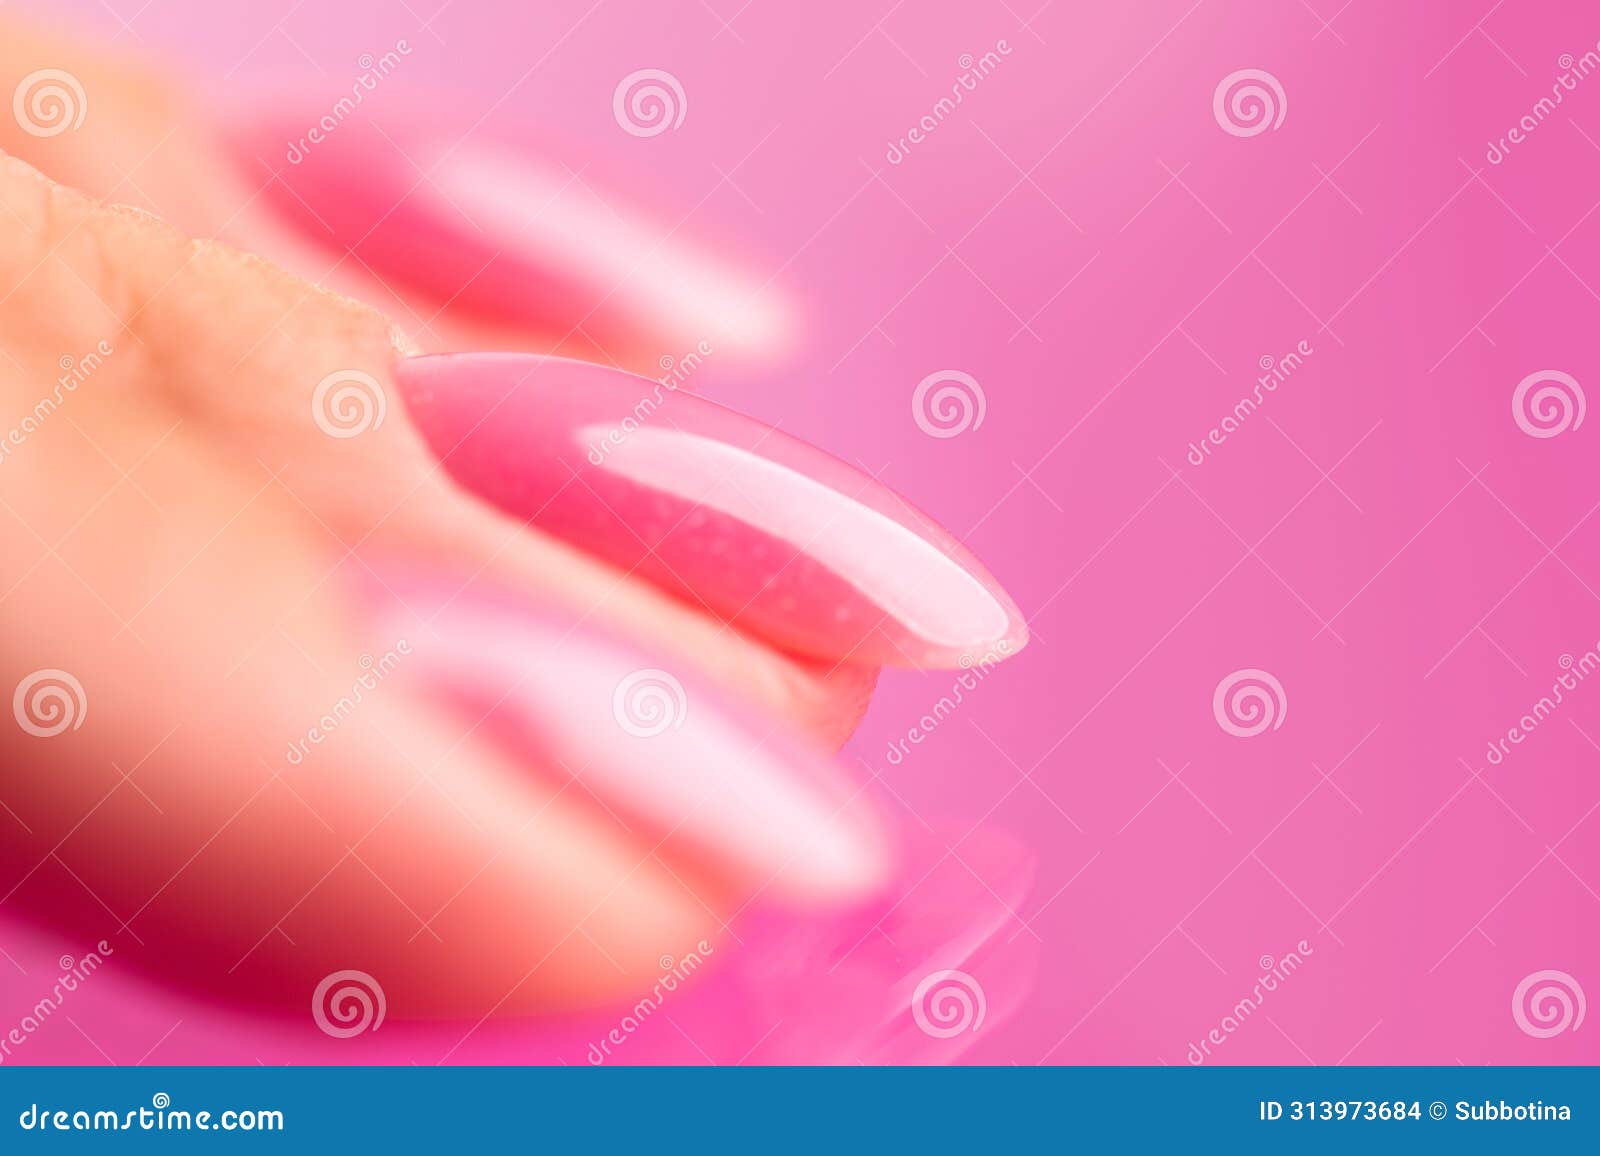 pink nail polish on woman nails, shellac uv gel, varnish, manicure concept in beauty salon